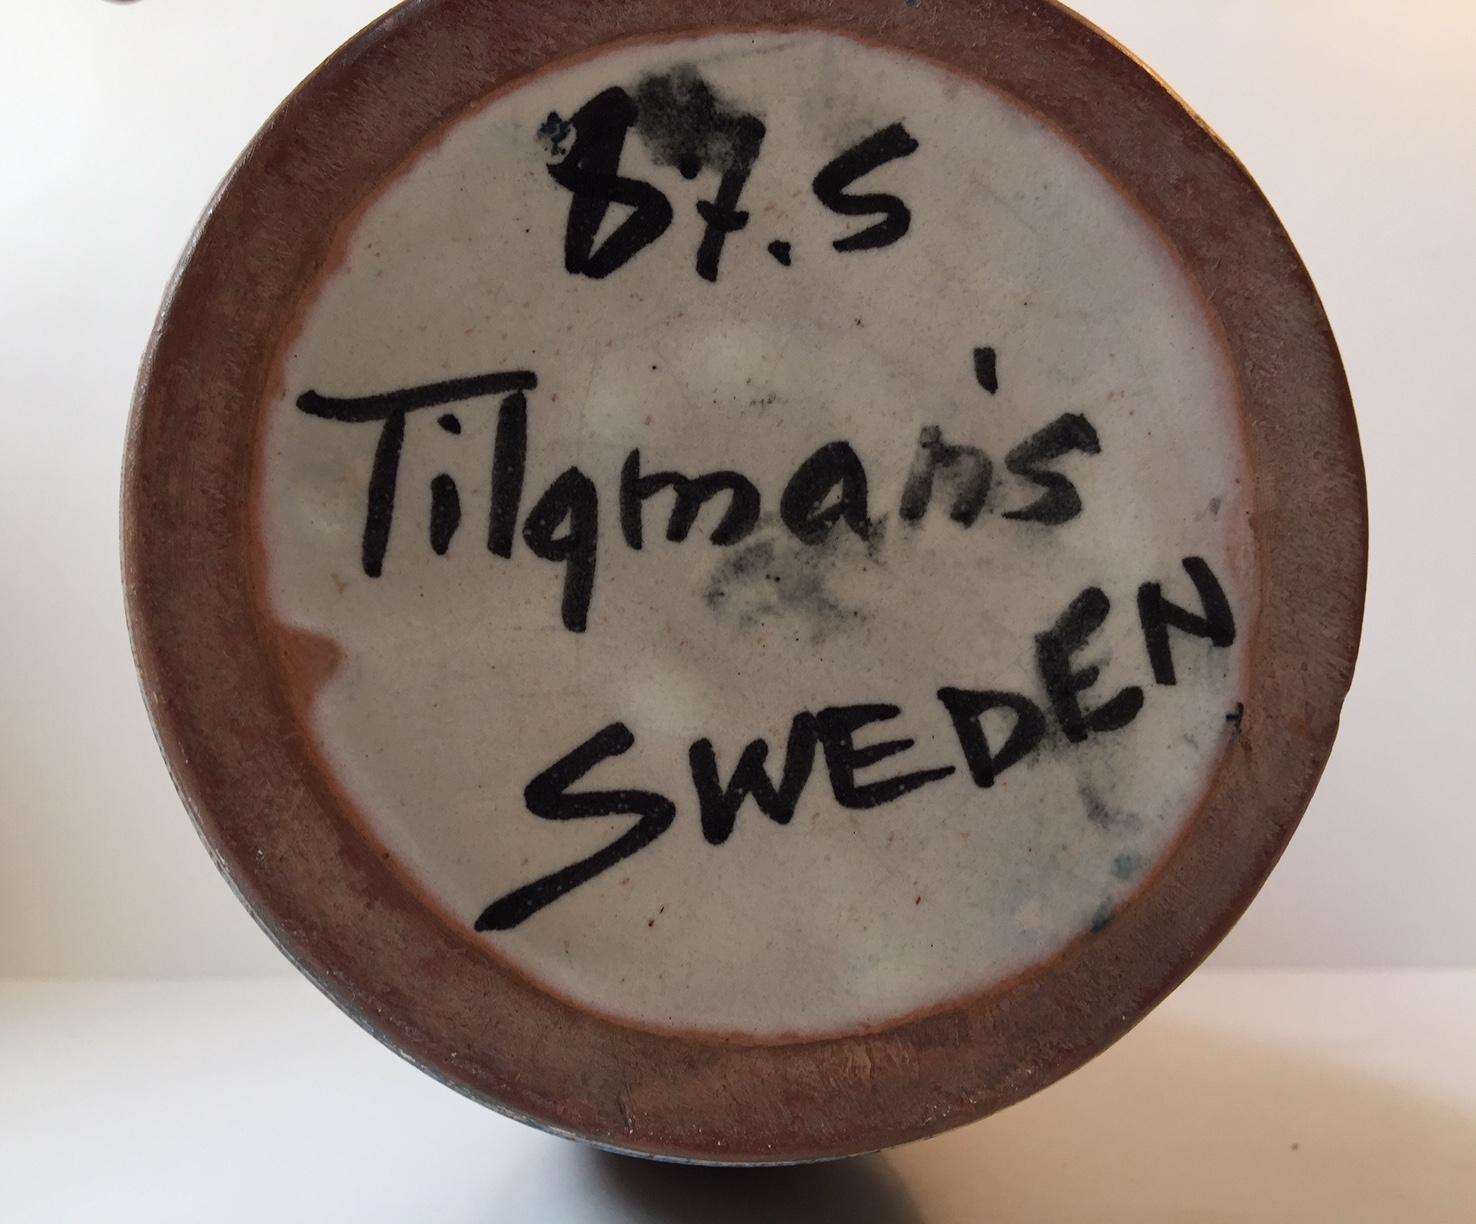 Hand-Painted Scandinavian Pottery Vase with Ducks & Bulrush Decor by Tilgmans, Sweden For Sale